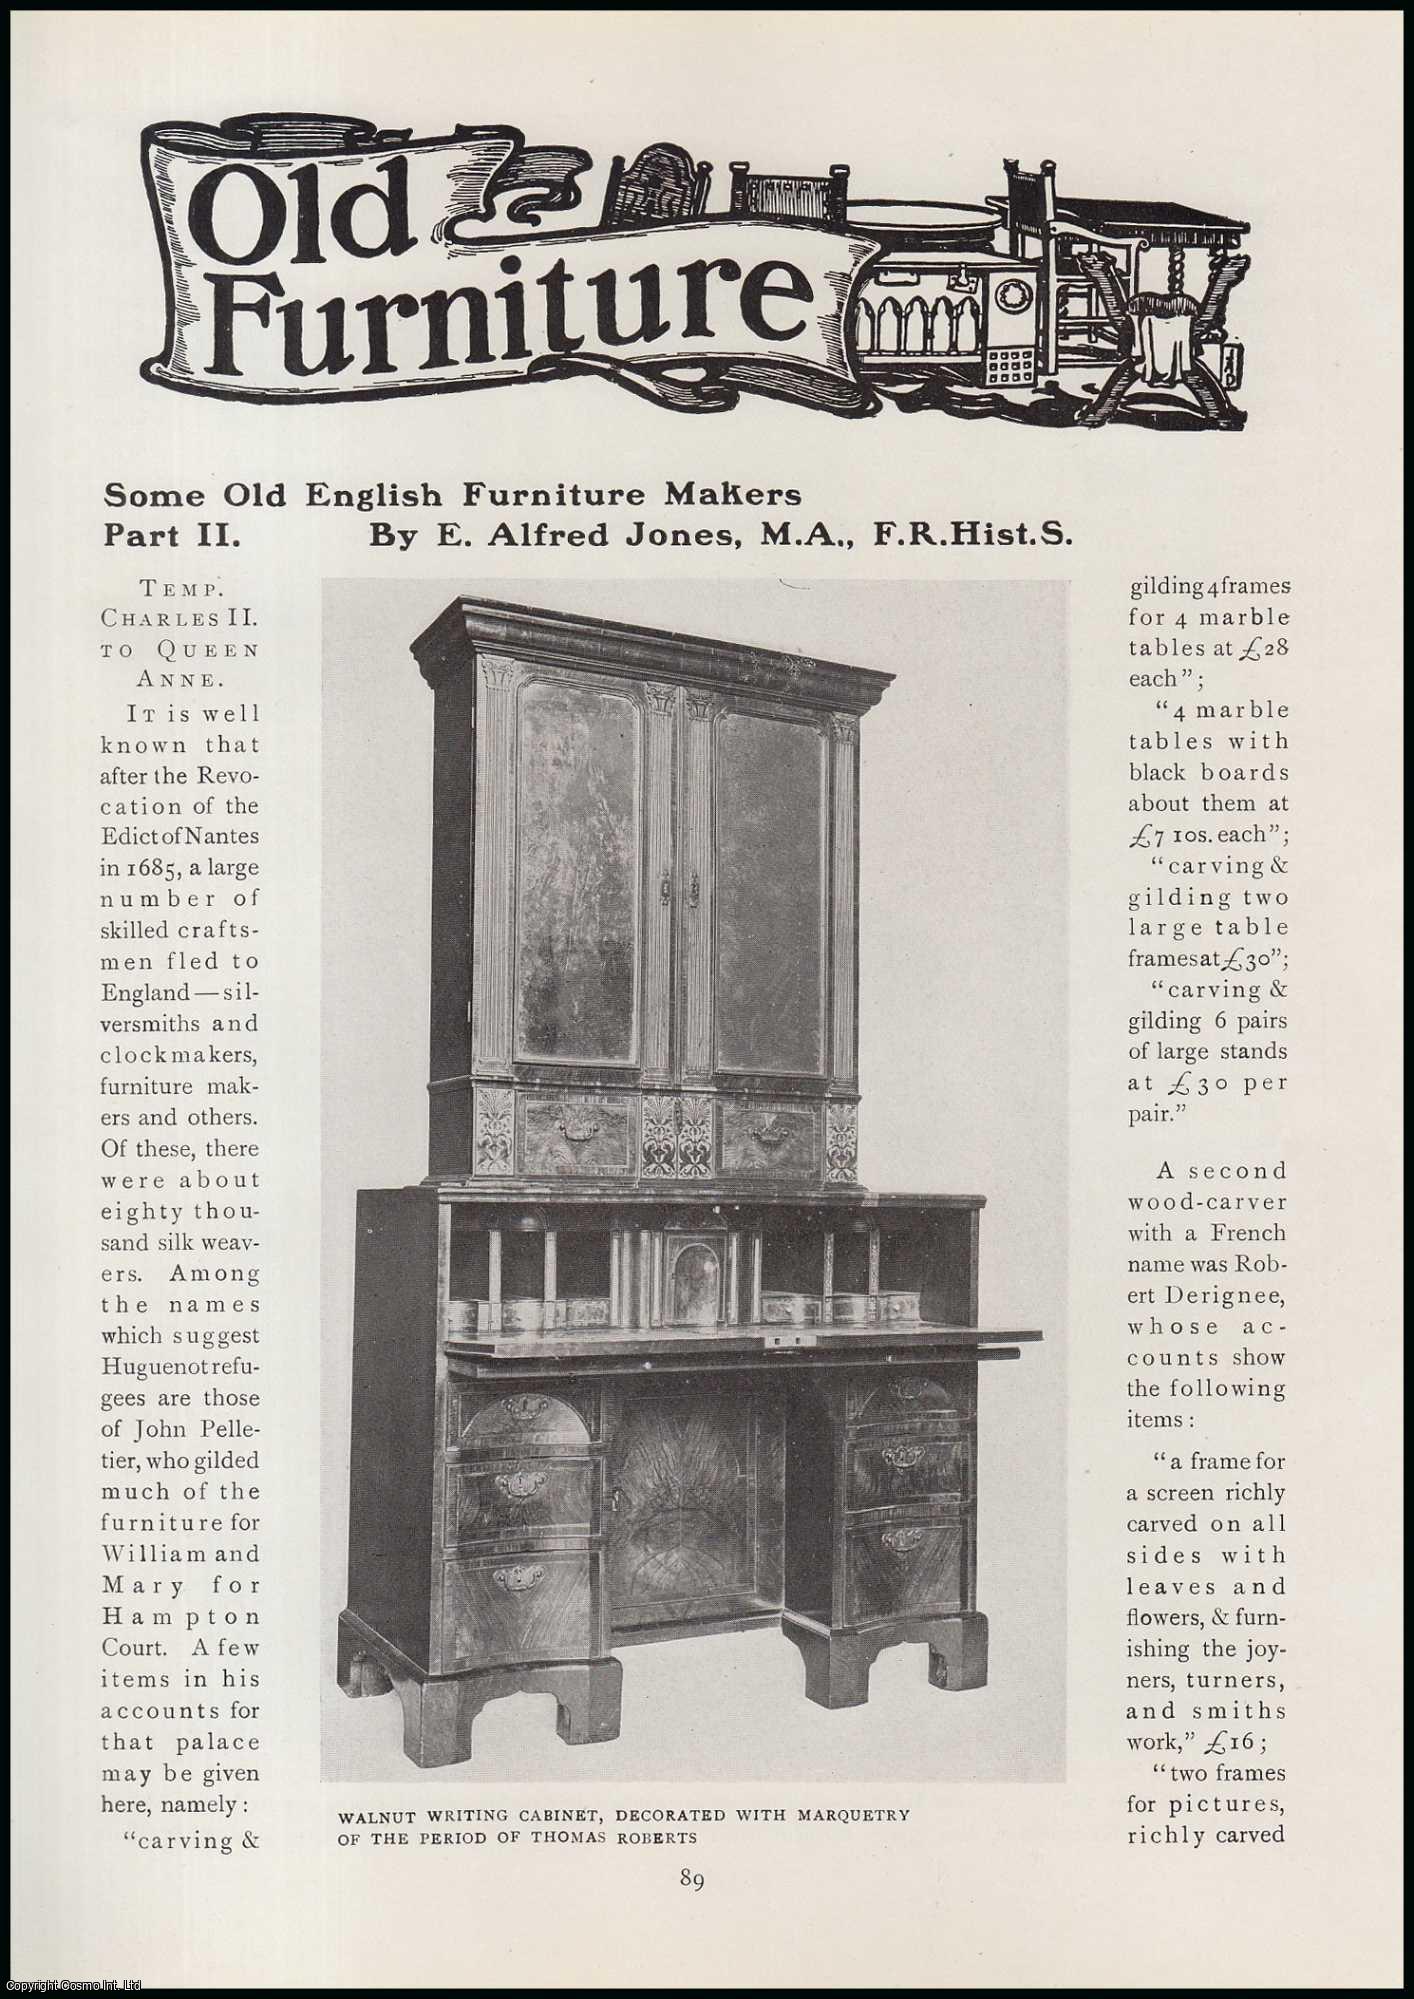 E. Alfred Jones - William Farnbrough & Garrett Johnson (part 2) : Some Old English Furniture Makers. An original article from The Connoisseur, 1920.